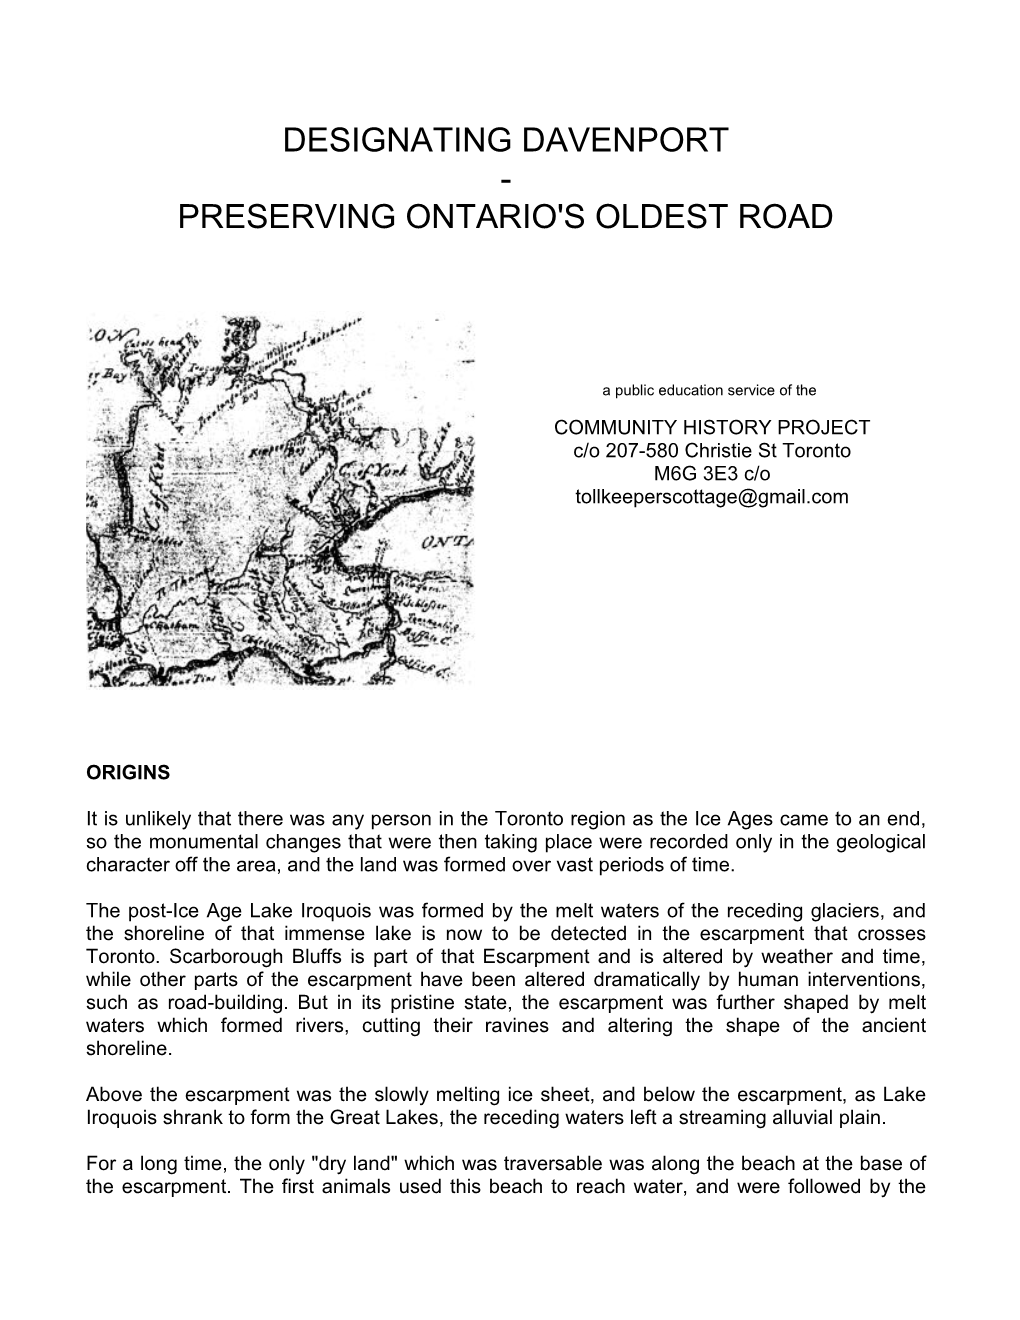 Designating Davenport - Preserving Ontario's Oldest Road